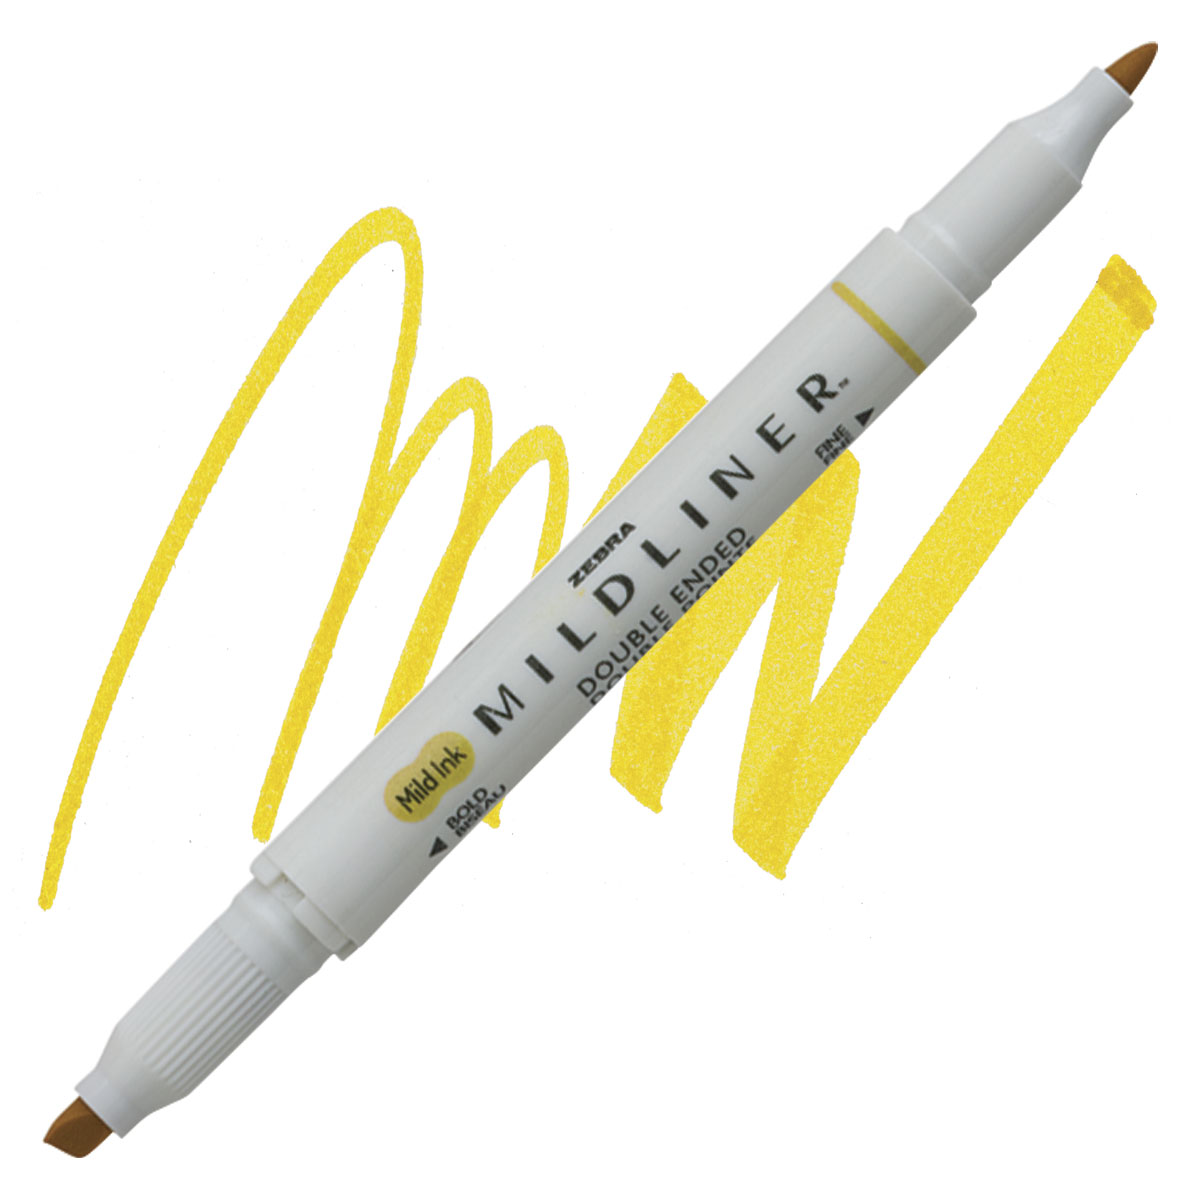 Zebra Pen MildLiner Creative Marker - ZEB78101 